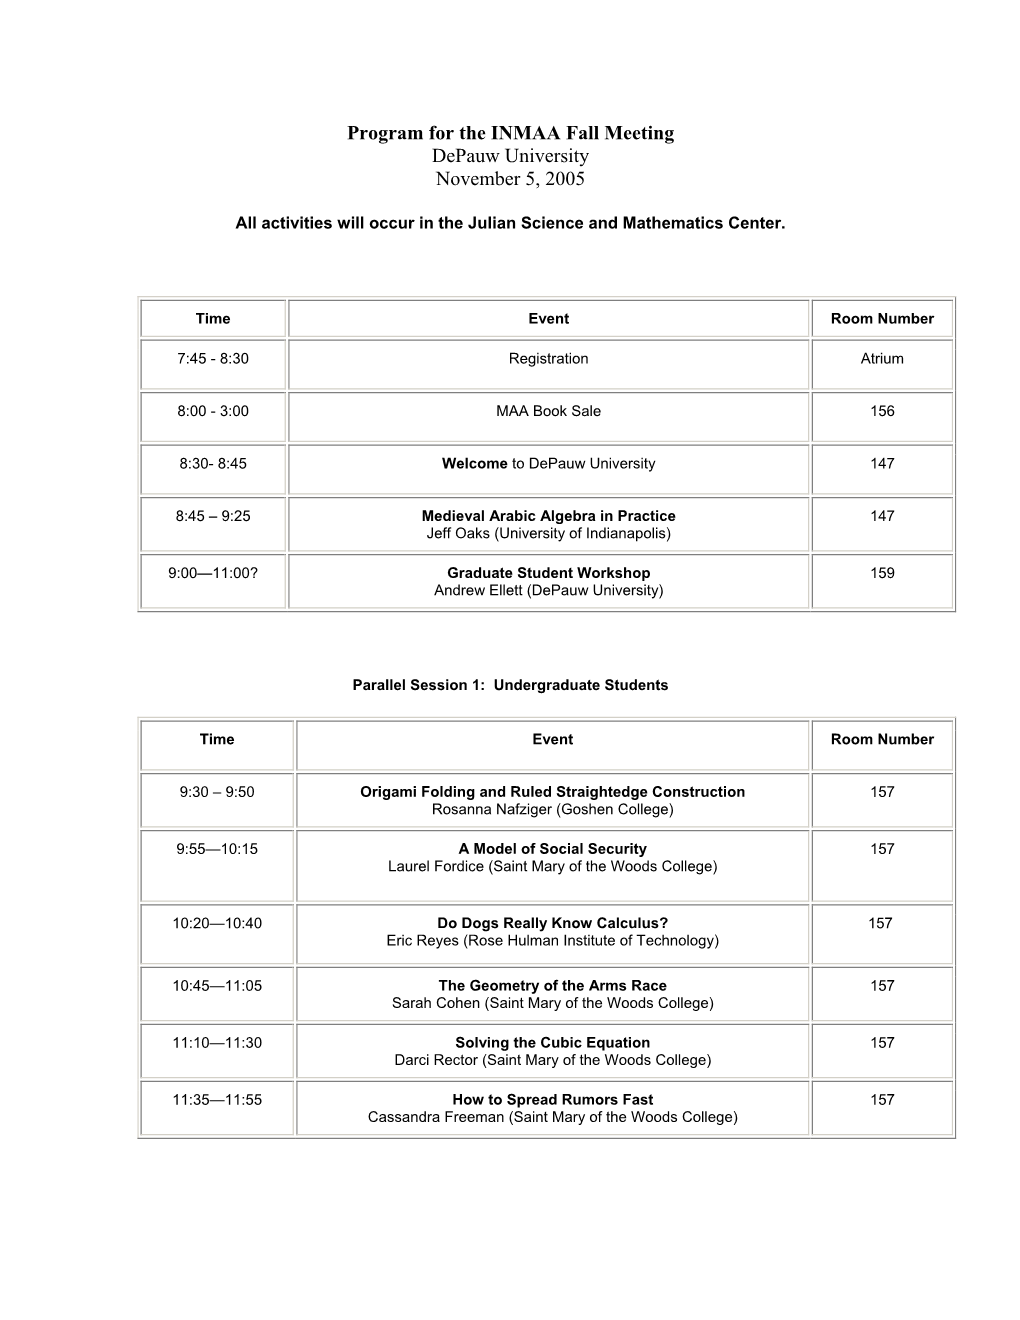 Program for the INMAA Fall Meeting Depauw University November 5, 2005